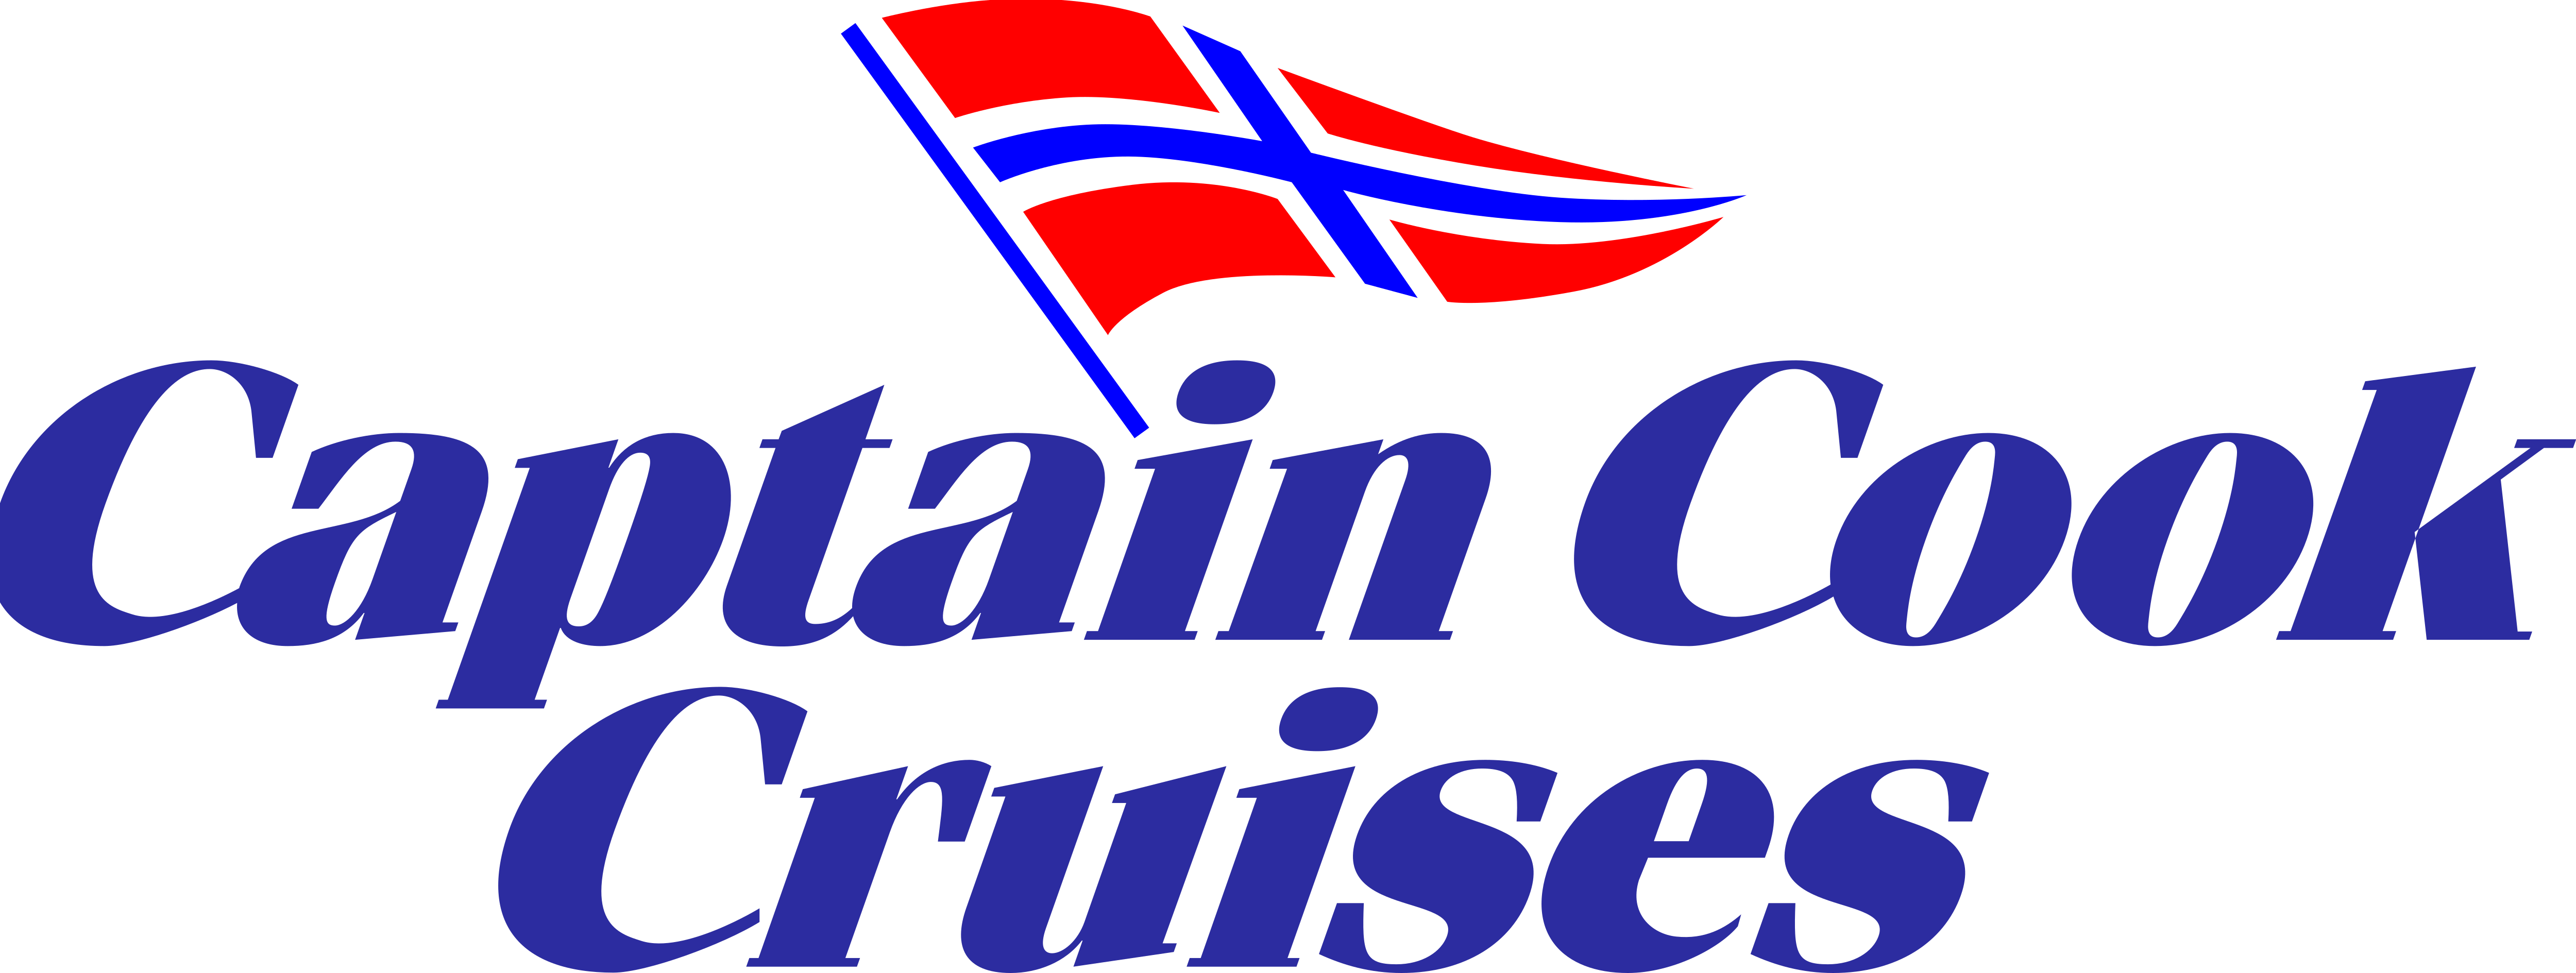 captain cook cruises fiji logo